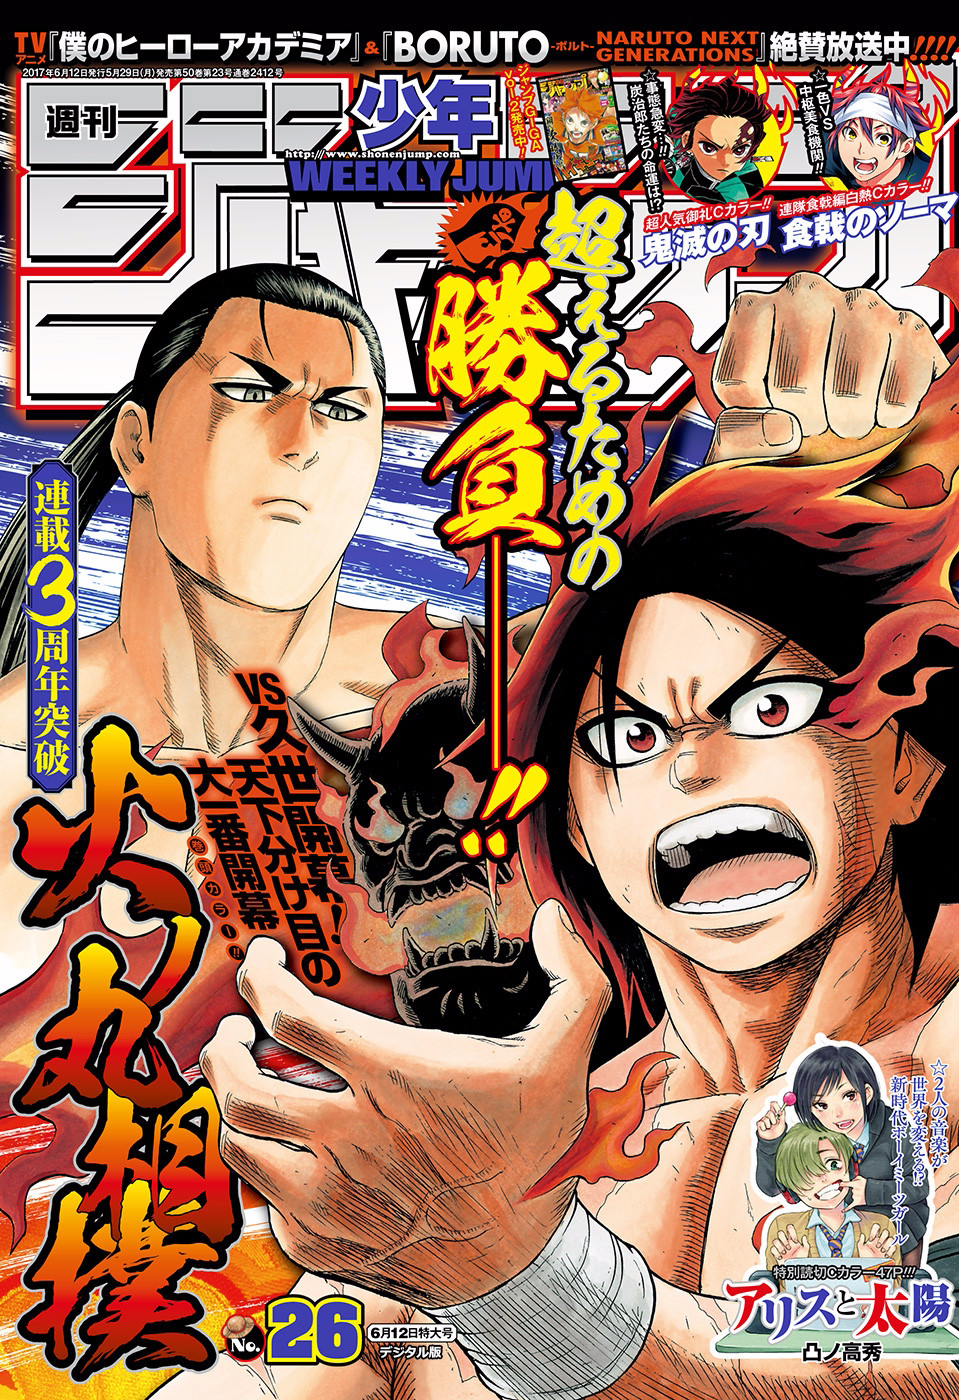 Weekly Shonen Jump Issue 26 17 Jump Database Fandom